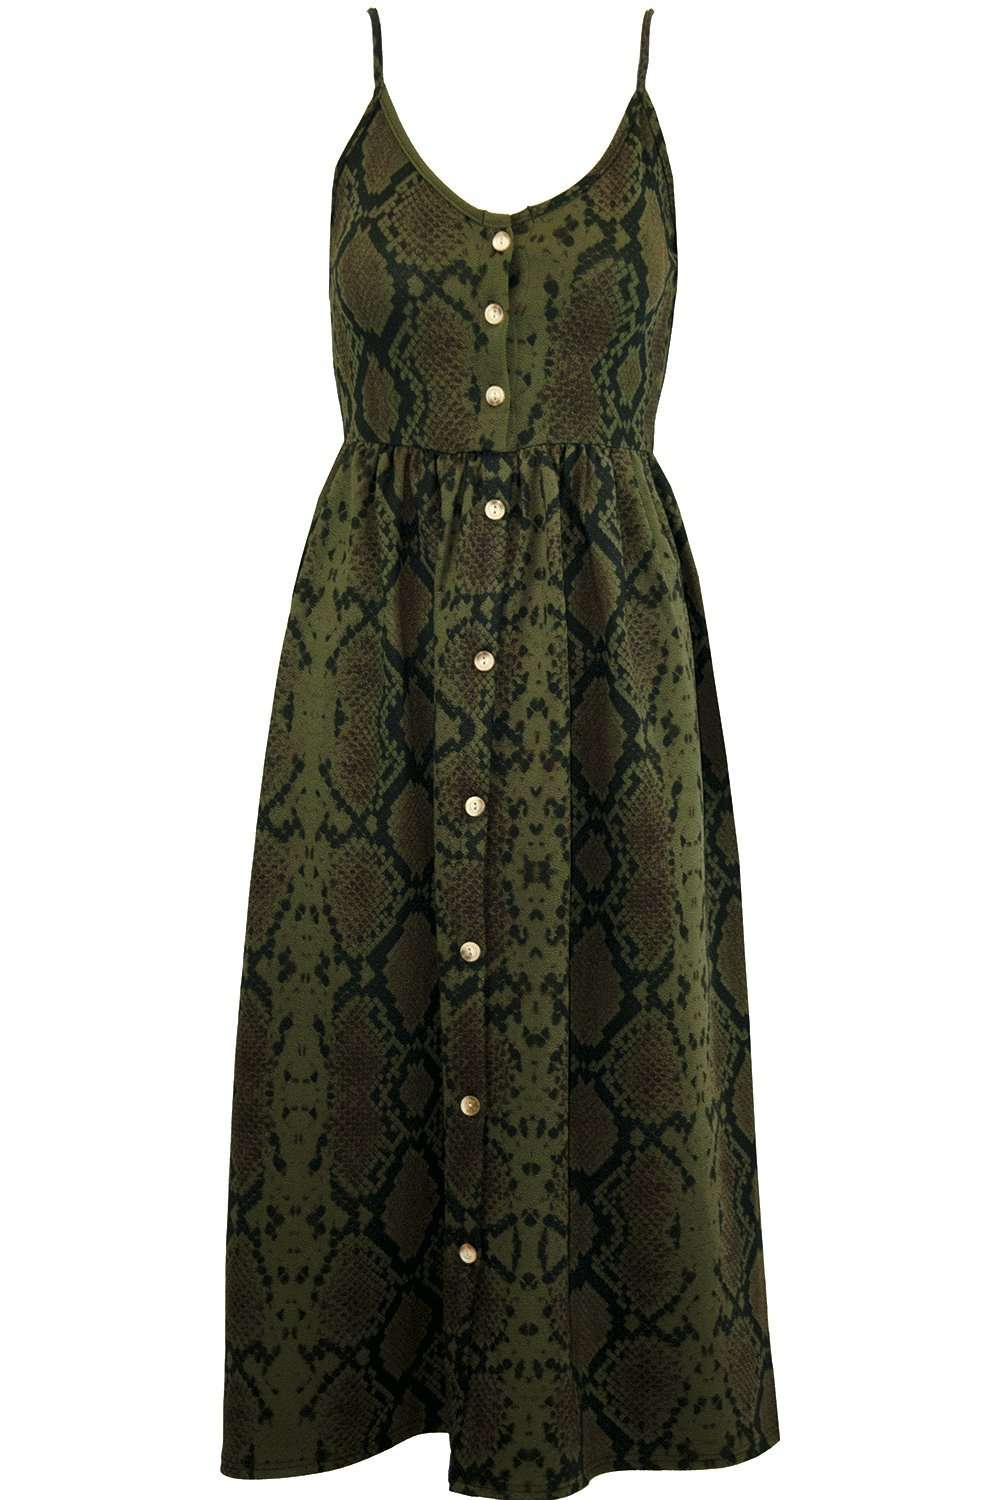 Strappy Button Embellished Snake Print Midi Dress - bejealous-com